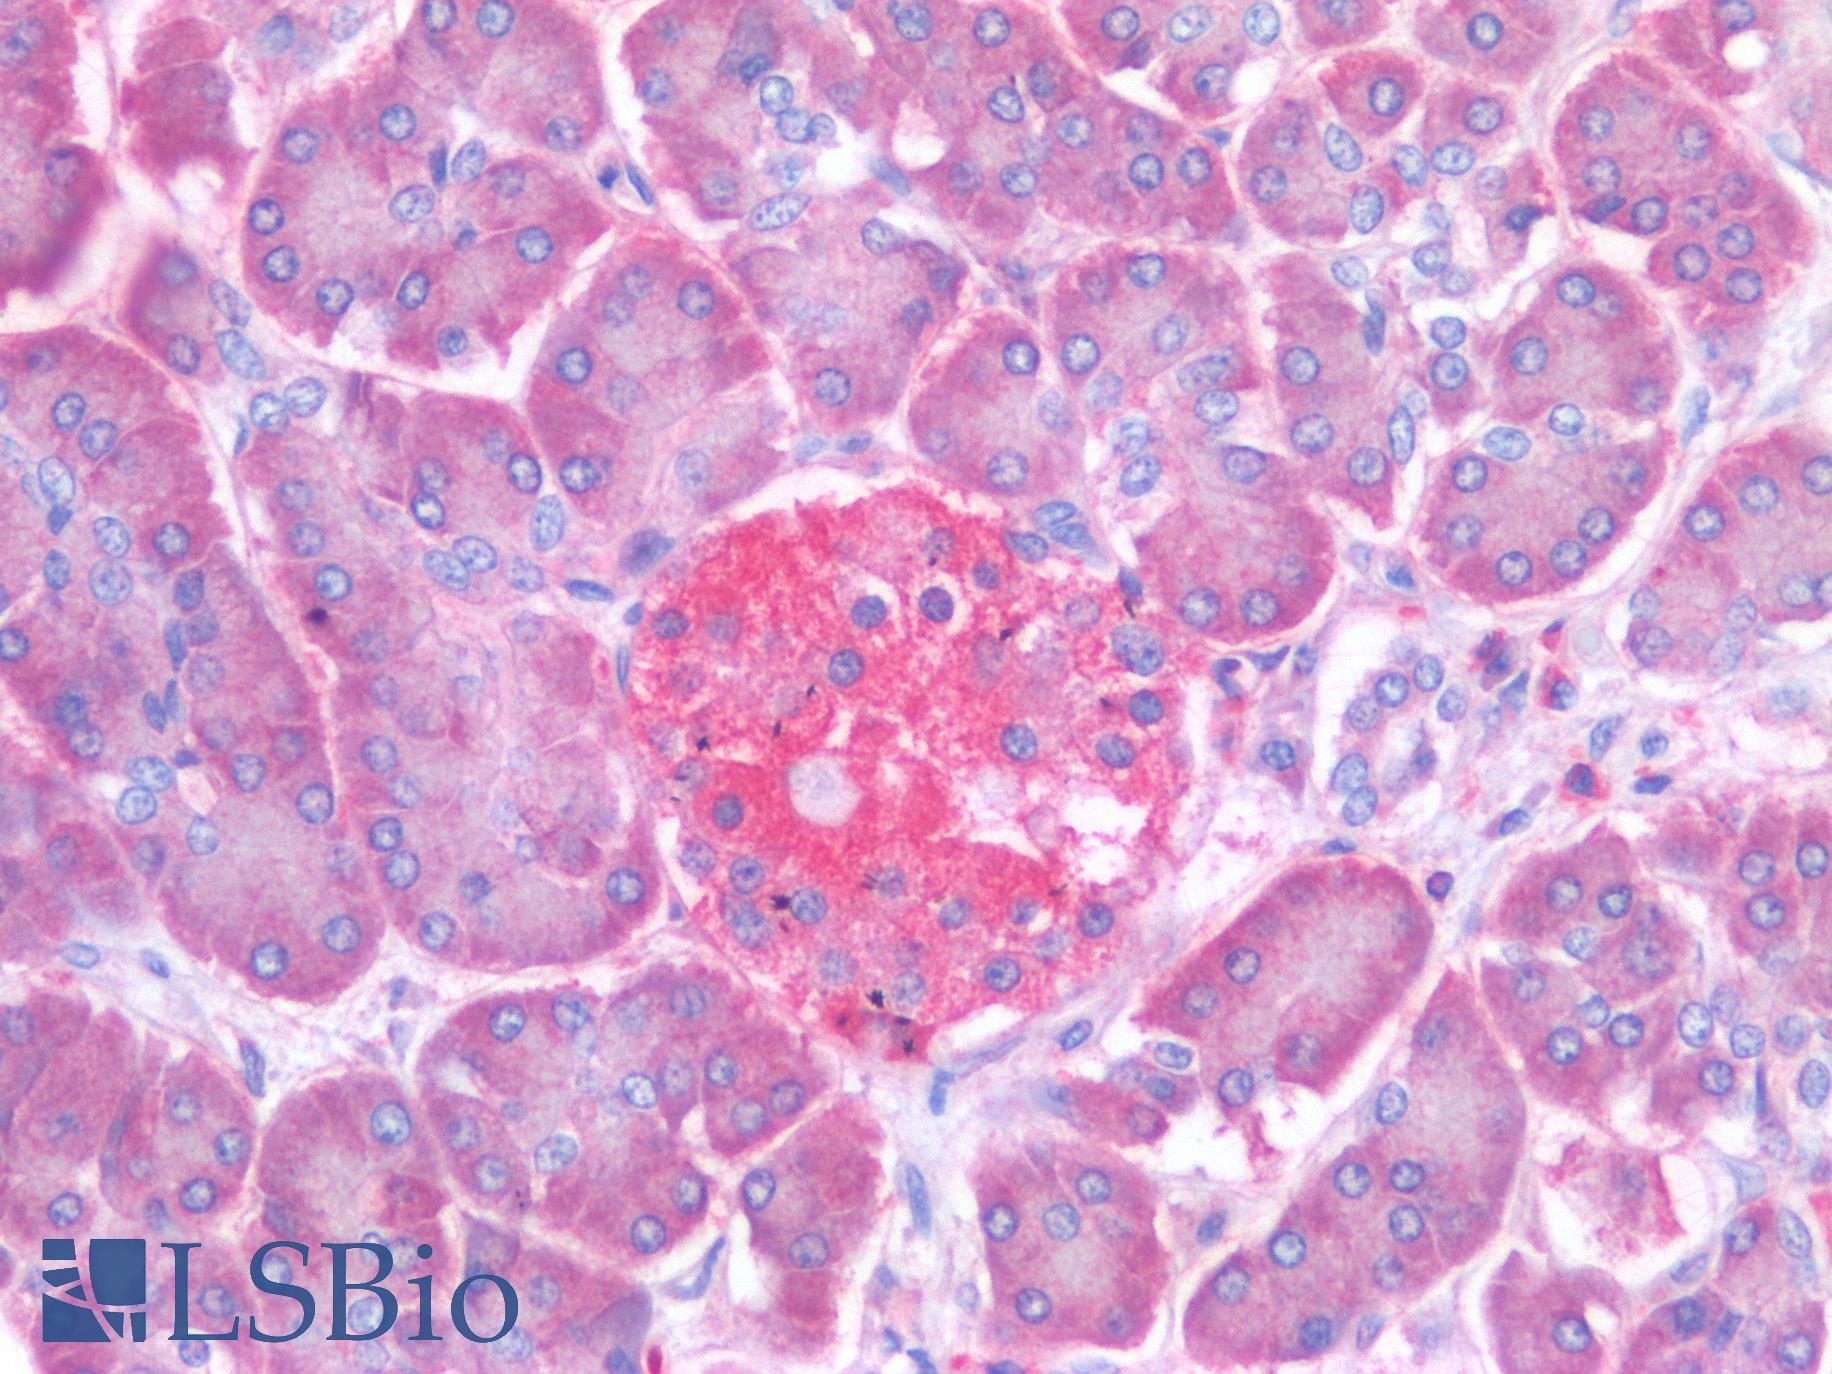 PTP1B Antibody - Human Pancreas, Islet of Langerhans: Formalin-Fixed, Paraffin-Embedded (FFPE)